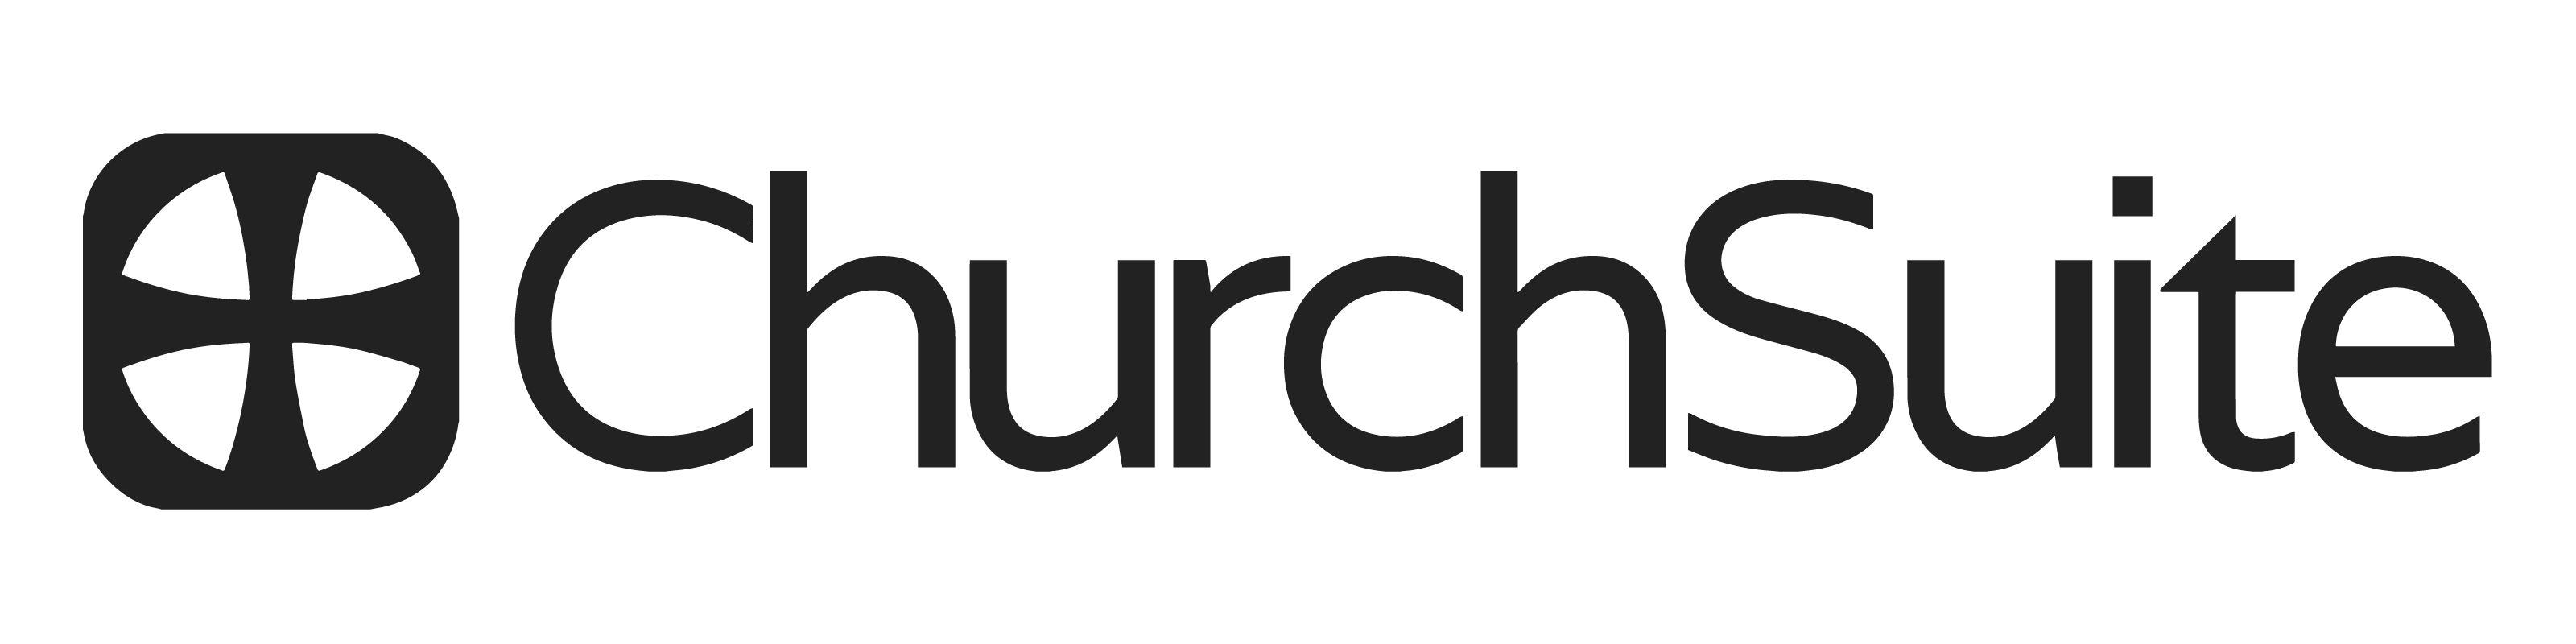 White Church Logo - Church Database System Logos & Branding